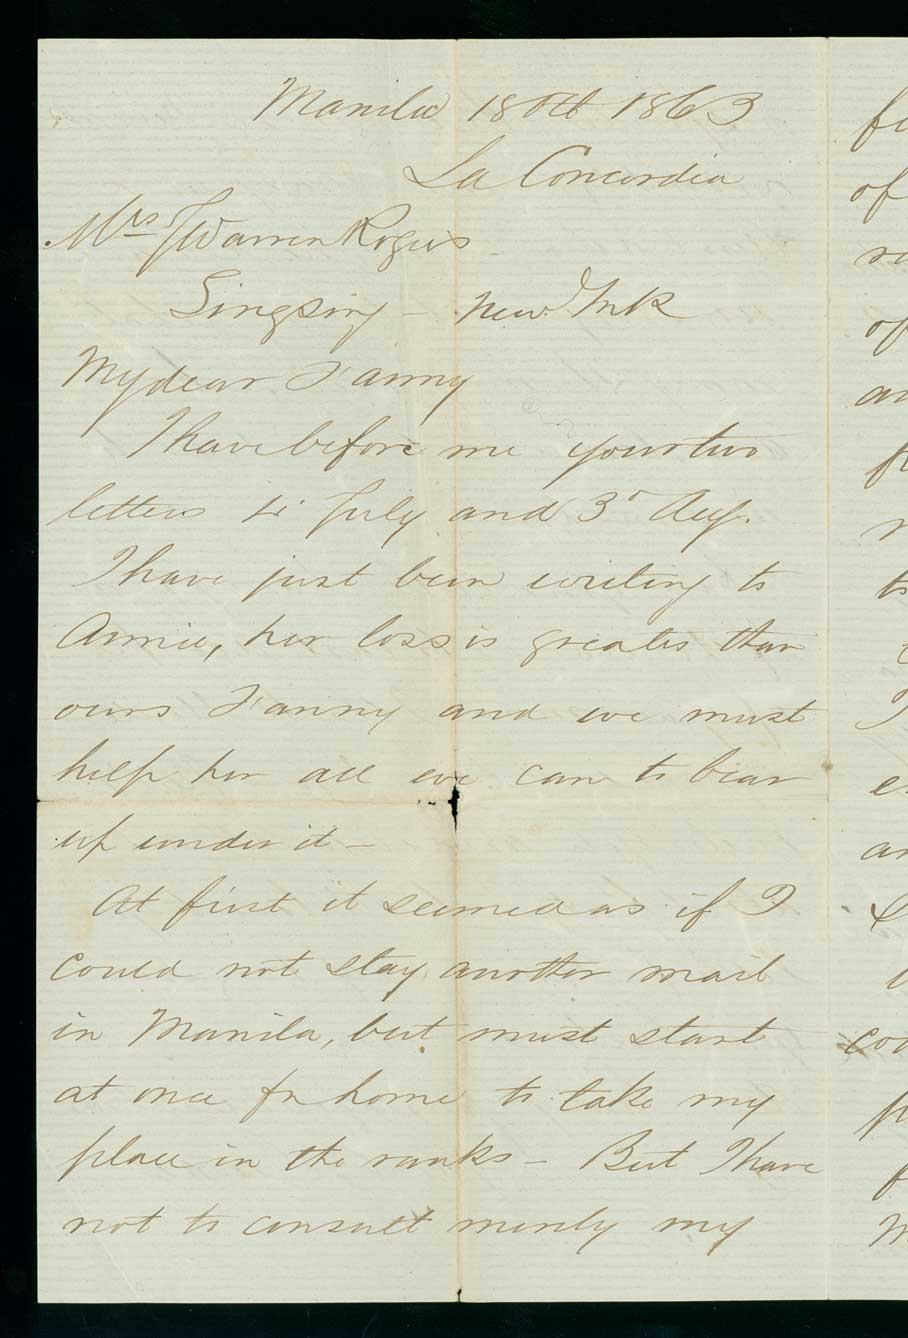 Letter, Ogden Ellery Edwards, Manila, Philippines, to Frances Edwards Rogers